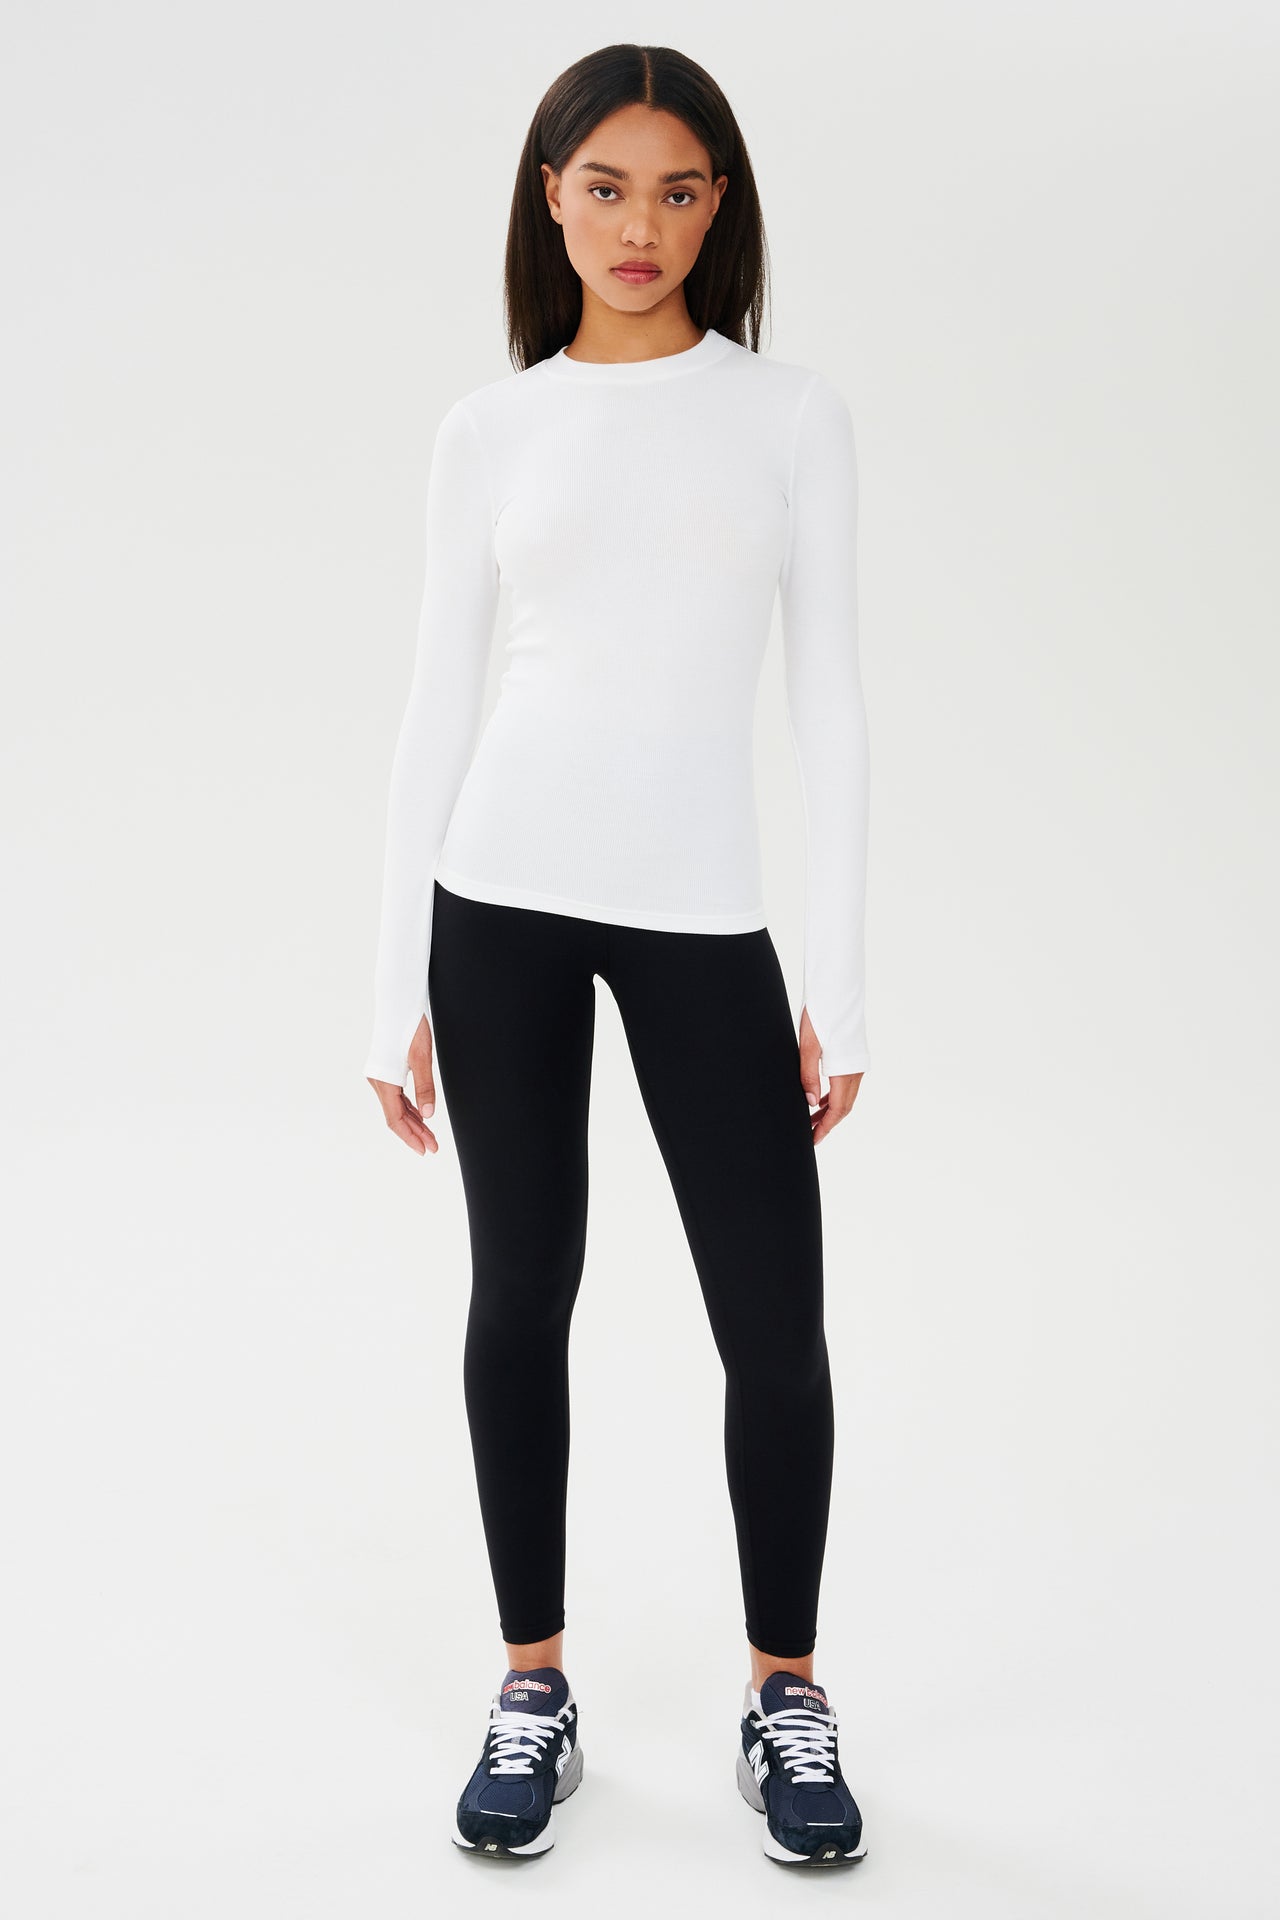 A woman wearing a SPLITS59 Louise Rib Long Sleeve - White shirt and black leggings for yoga.